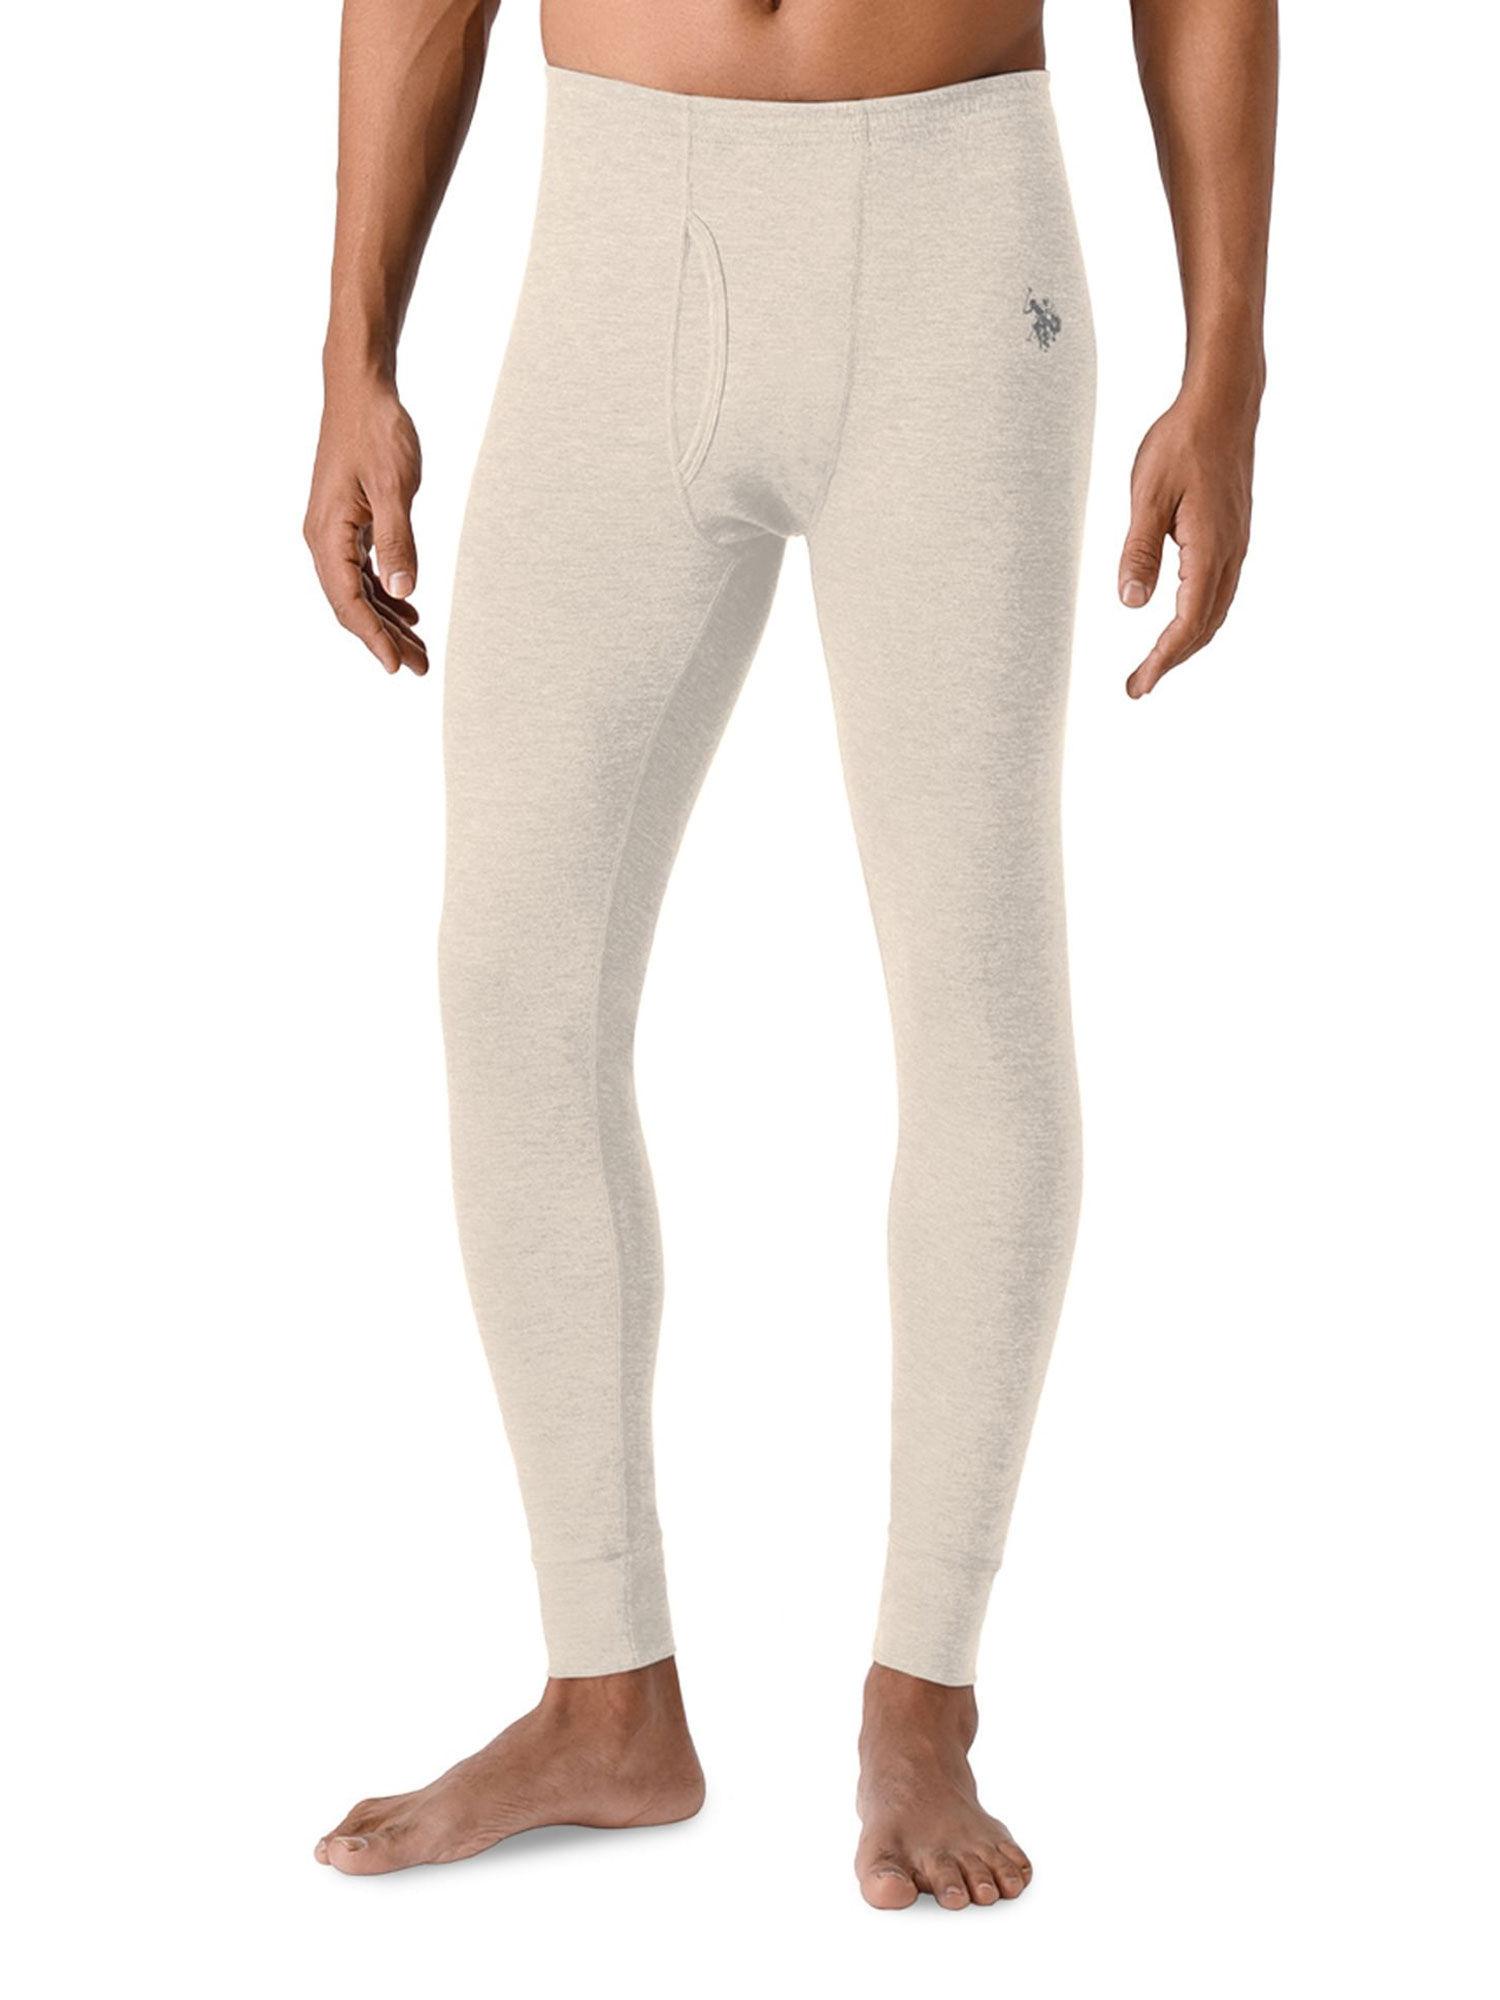 men-ecru-grey-i756-mid-rise-snug-fit-heathered-thermal-pants